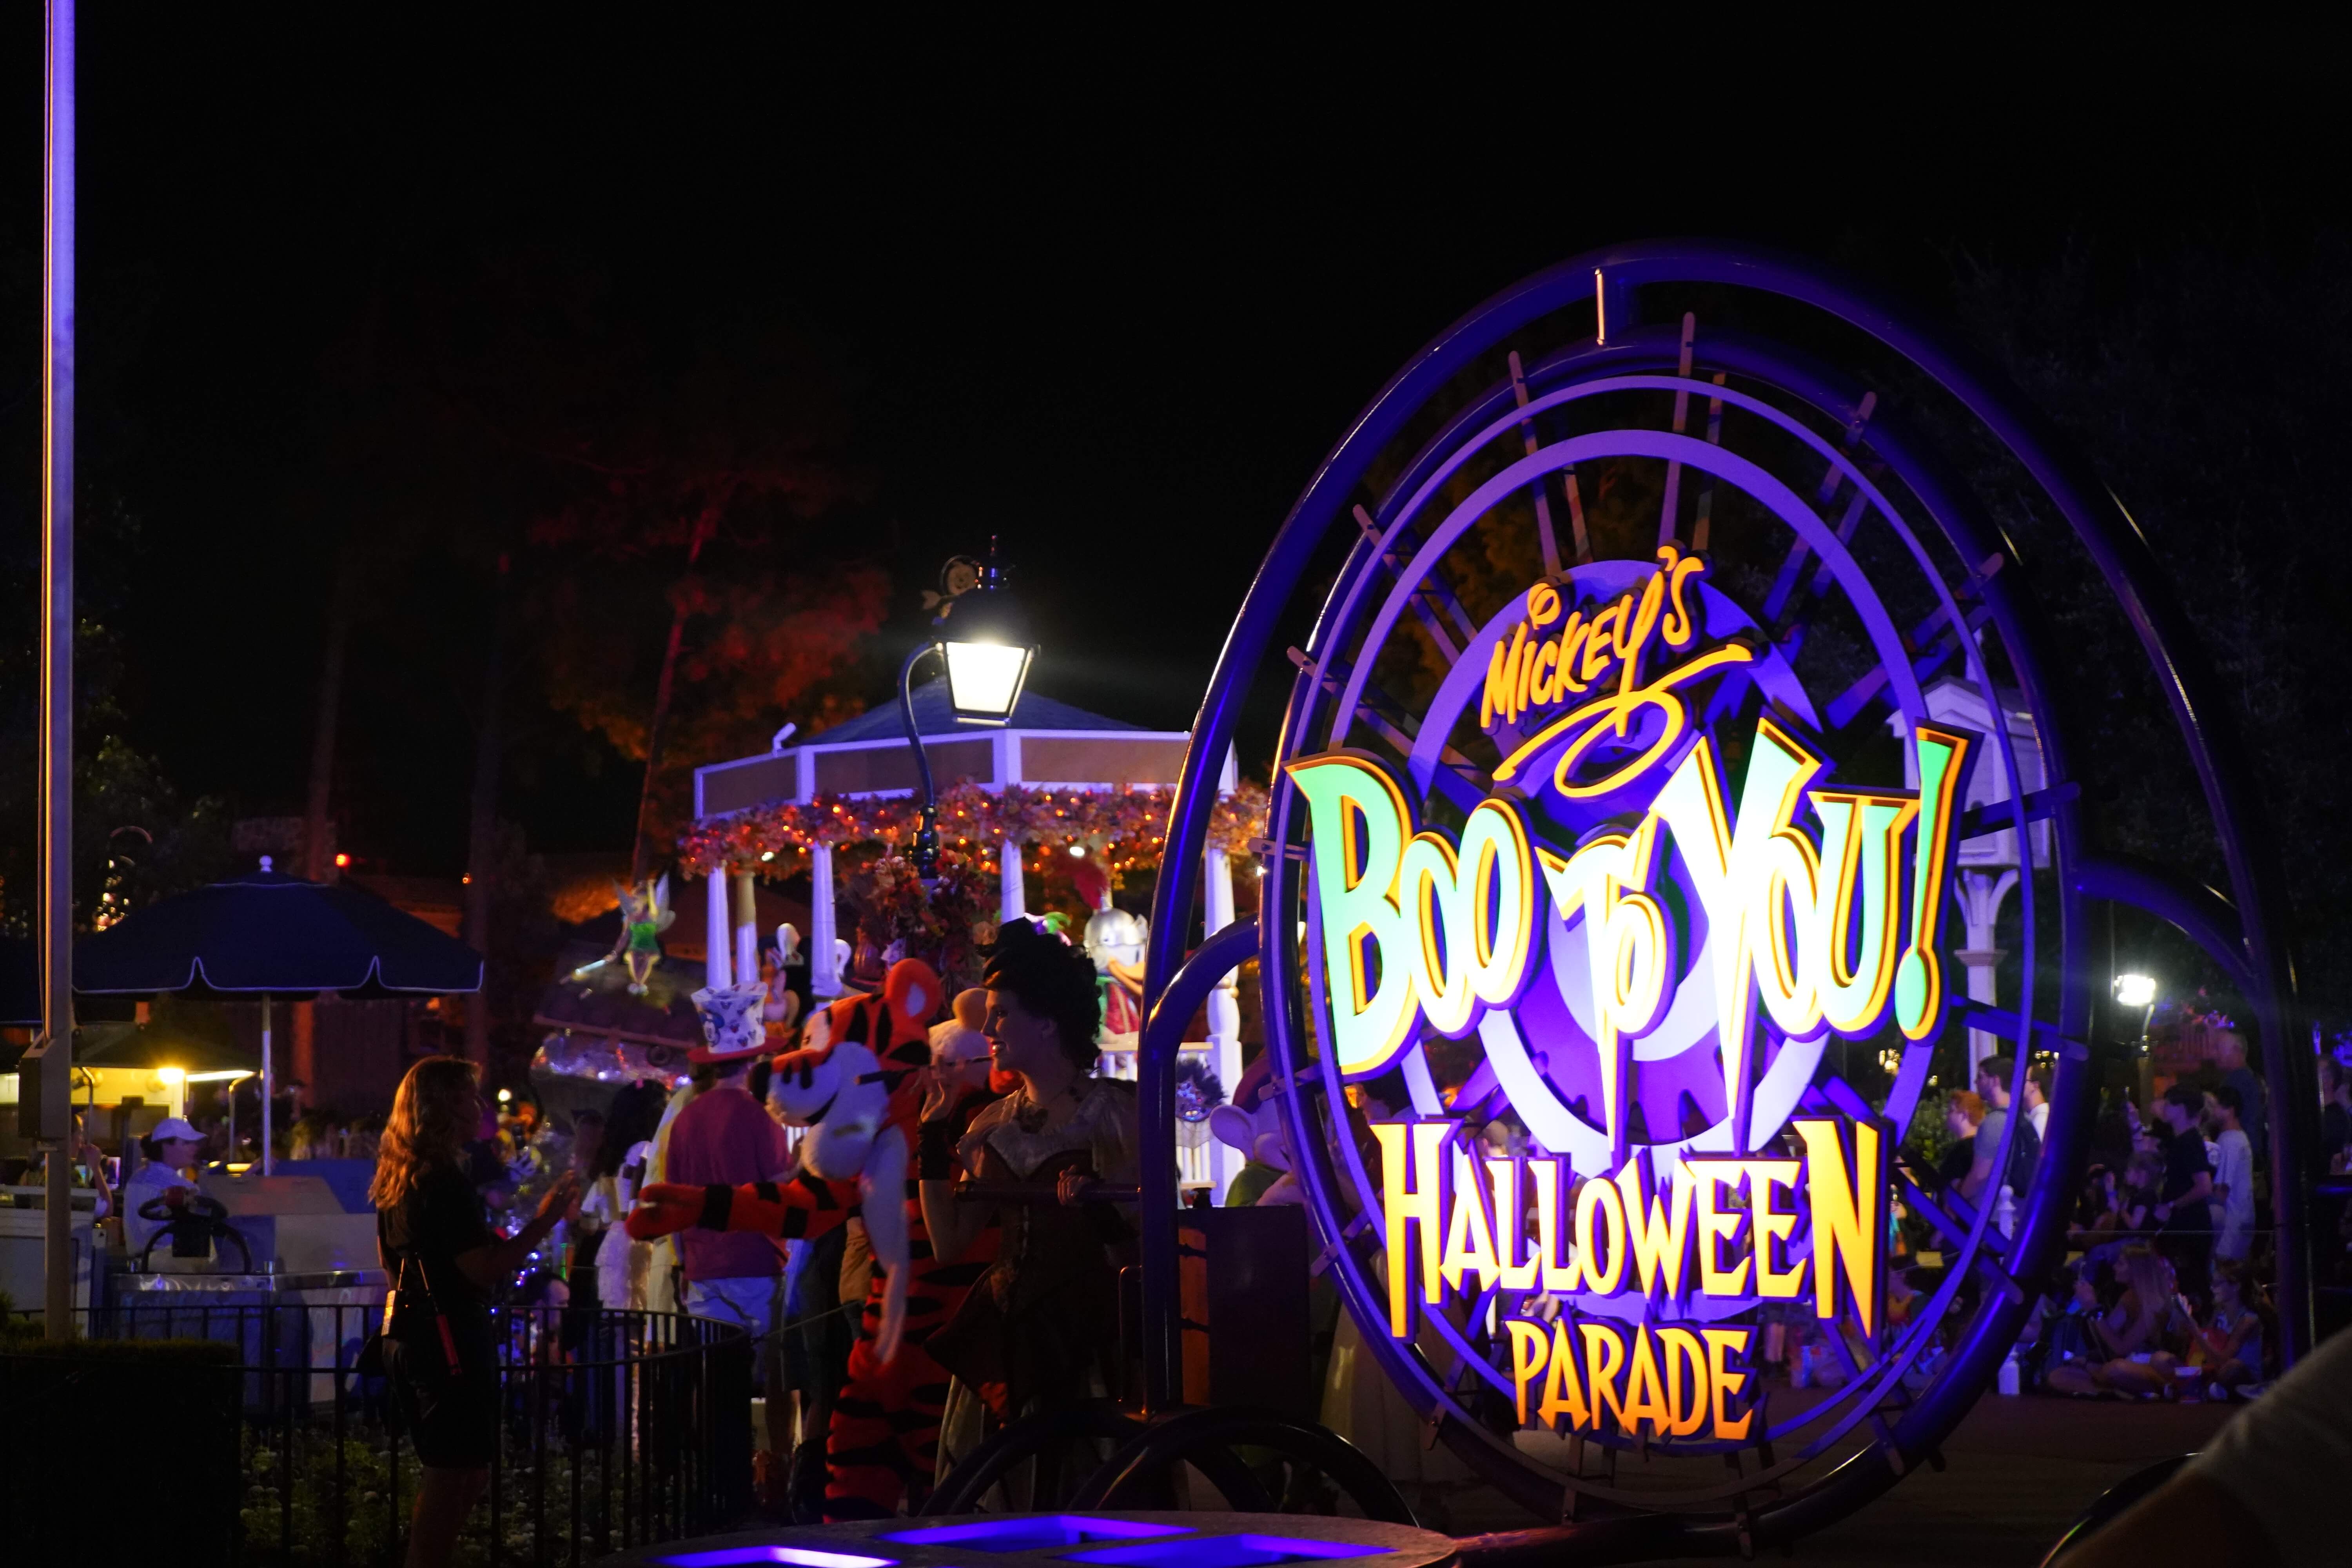 Boo To You Halloween Parade at Magic Kingdom Parade Float